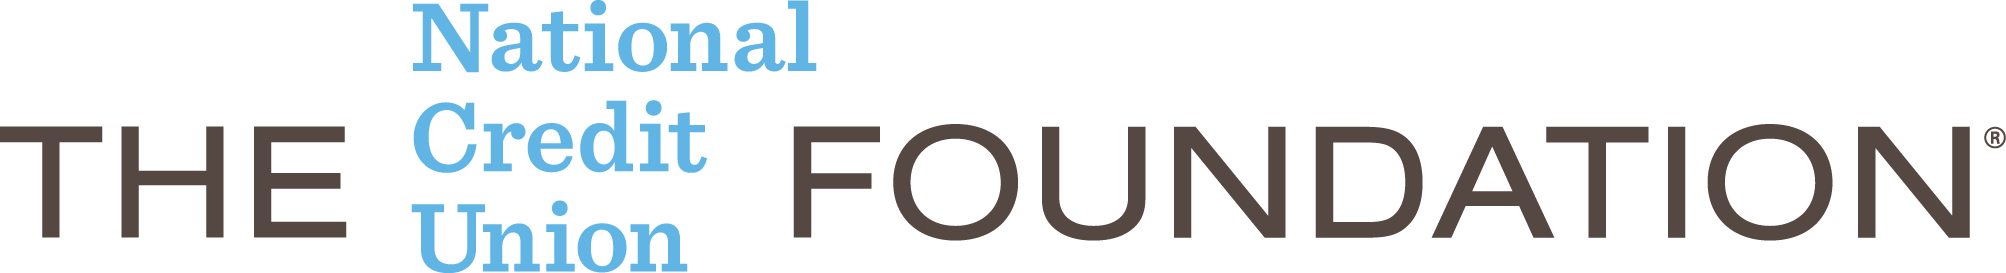 The National Credit Union Foundation Logo